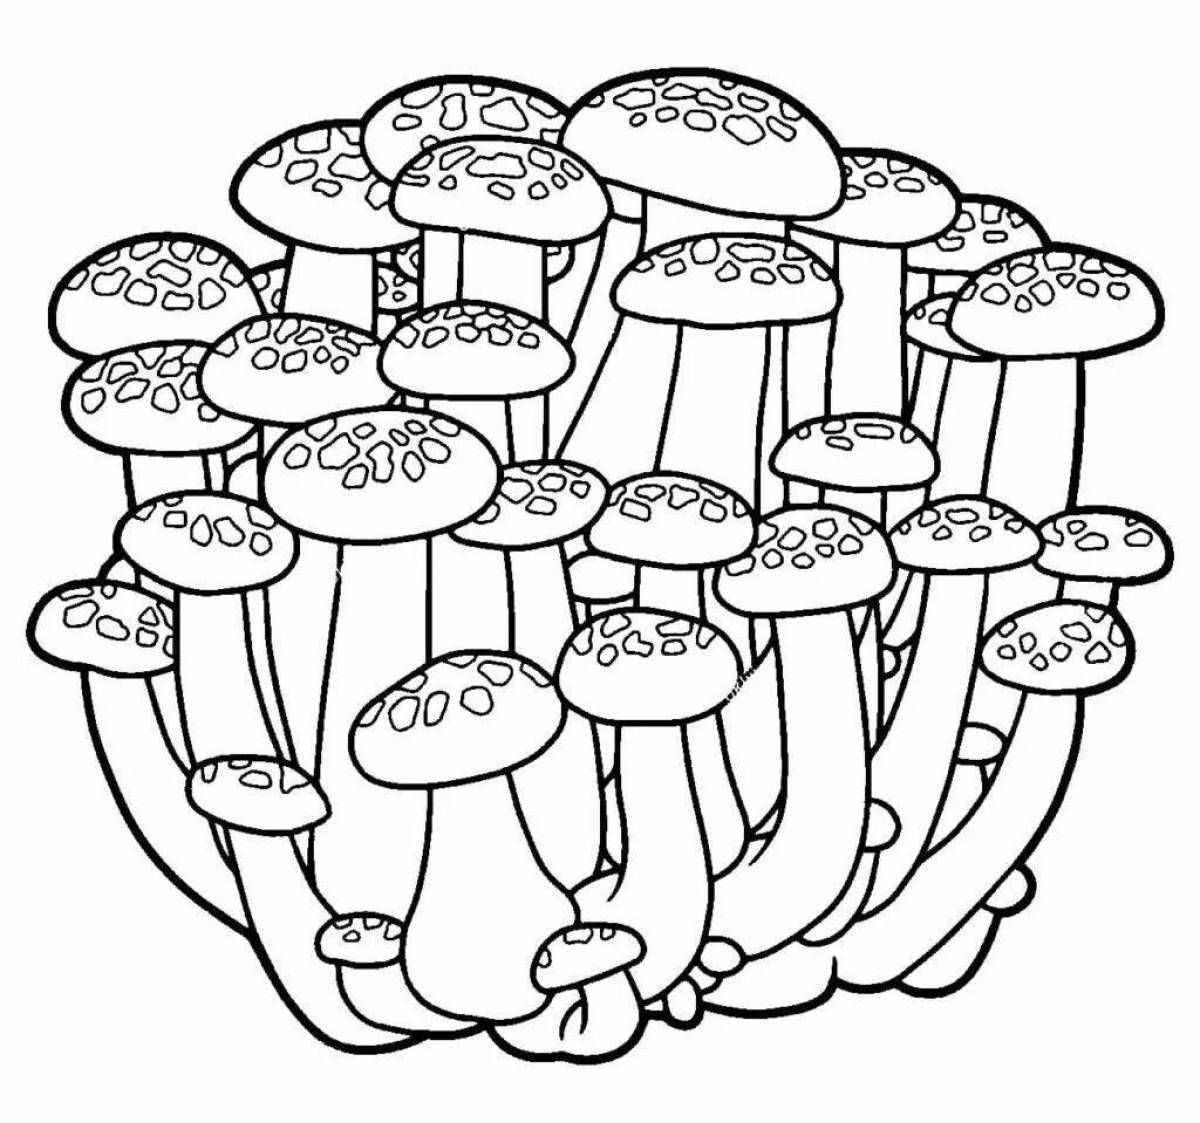 Rampant honey mushroom coloring page